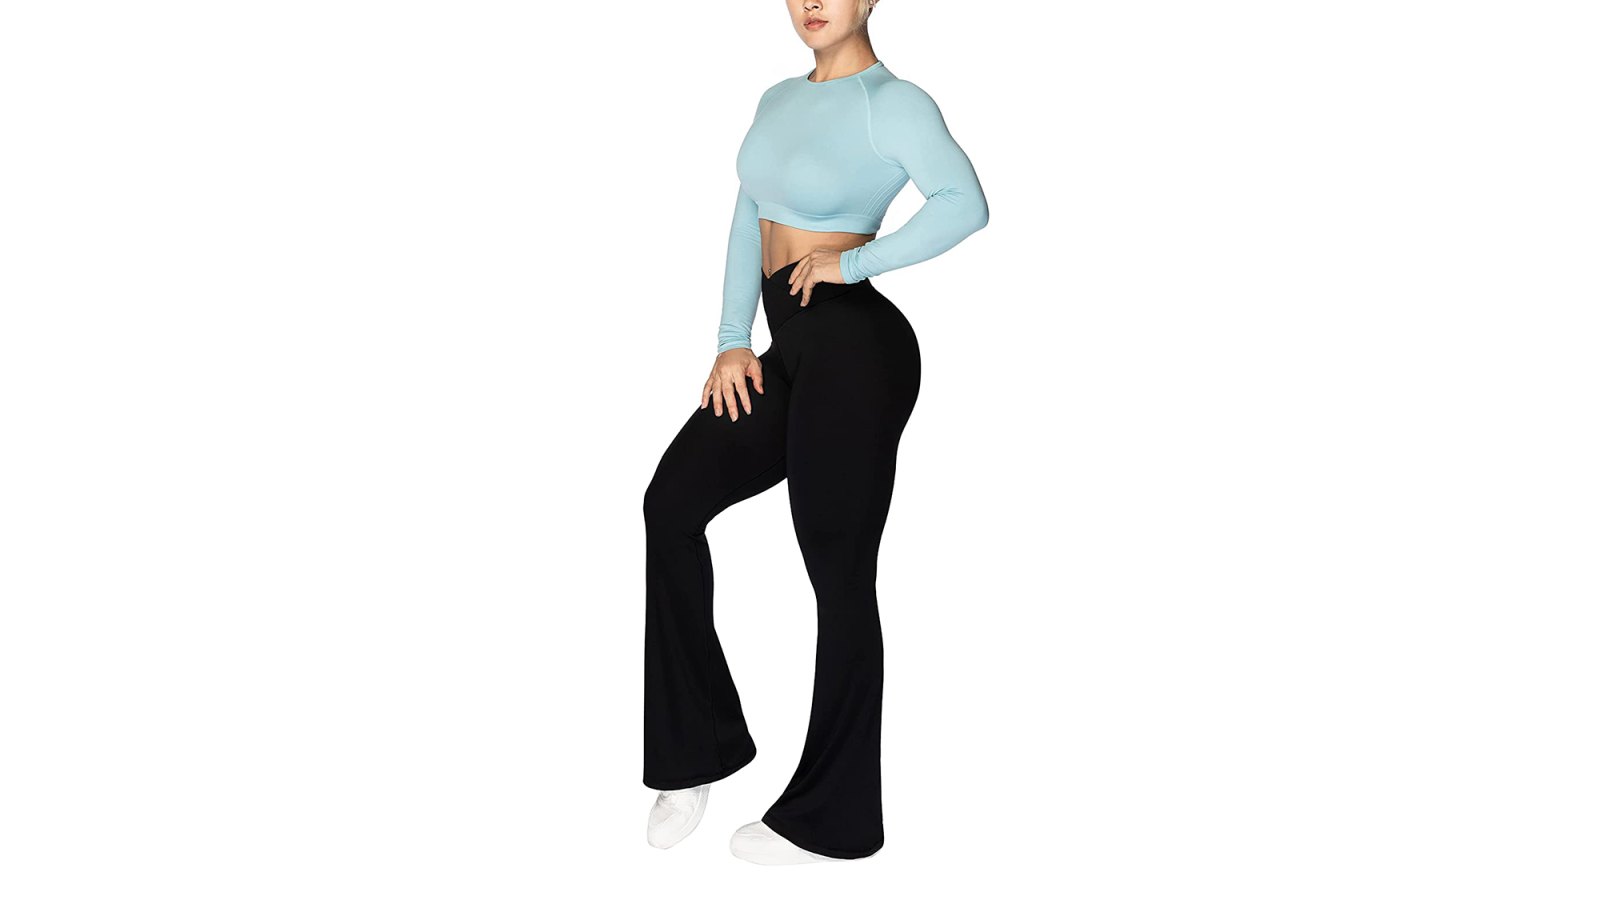 SUNZEL Crossover Flare Legging Women's Yoga Pants Black Size M